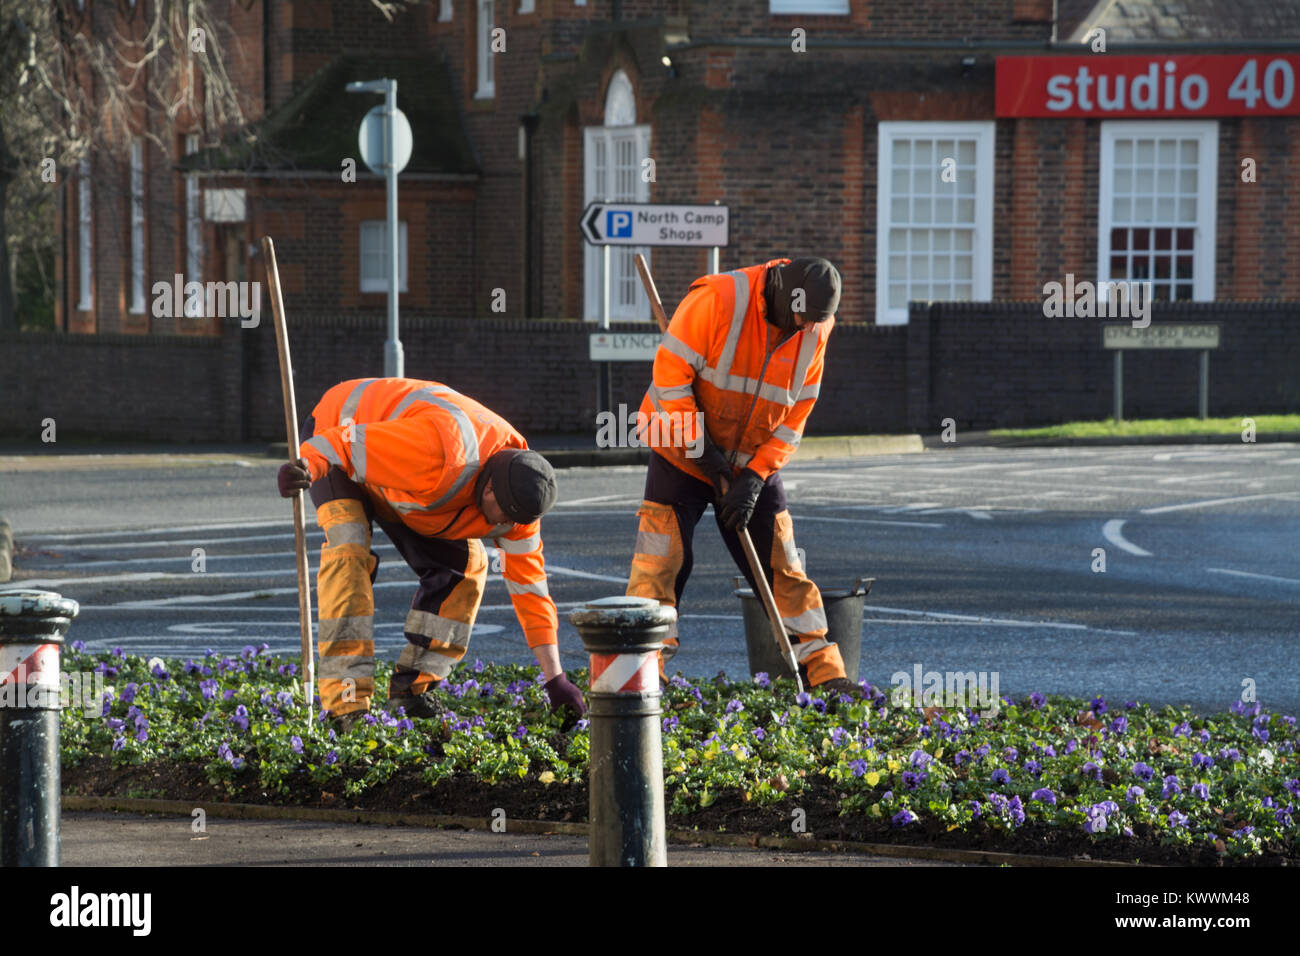 Gardeners working among flower bed in Farnborough, Hampshire, UK, for Rushmoor Borough Council Stock Photo